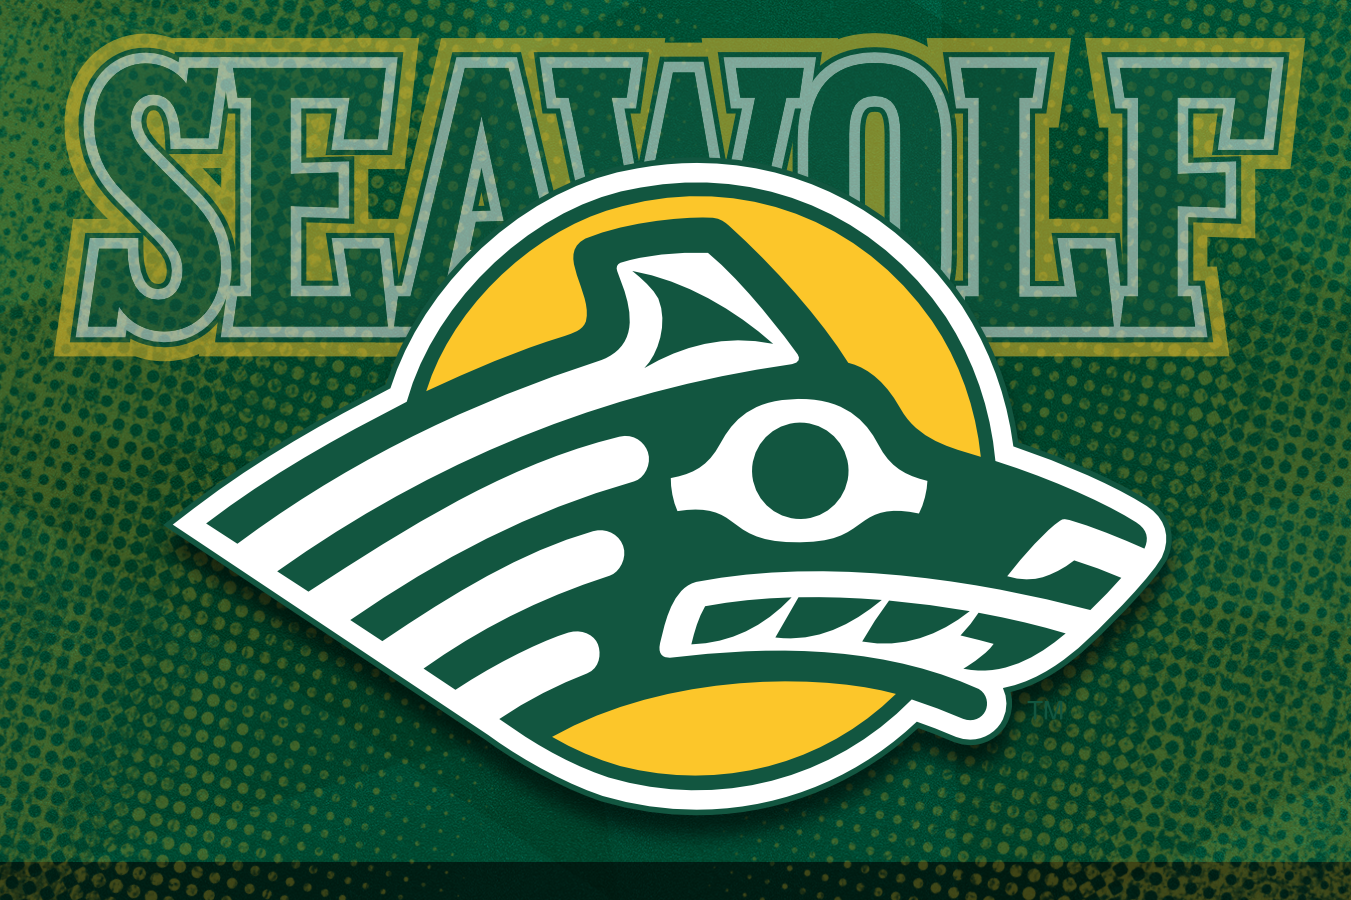 Seawolf logo